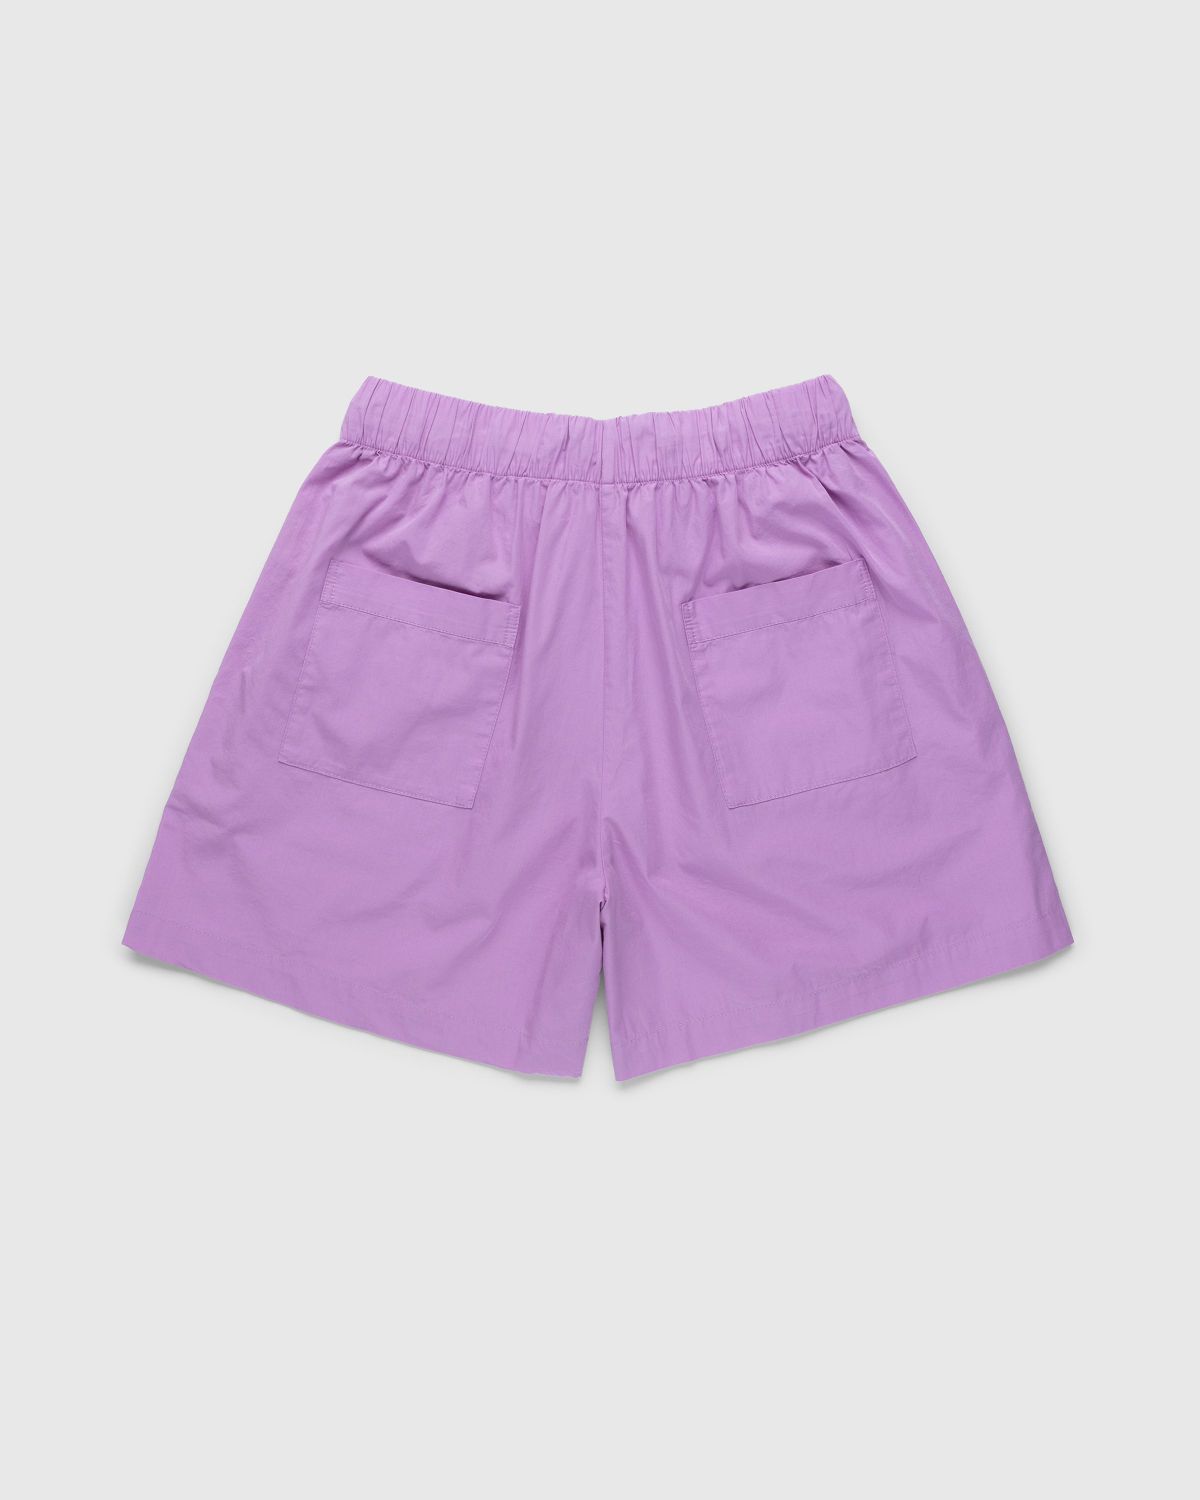 Tekla – Cotton Poplin Pyjamas Shorts Purple Pink | Highsnobiety Shop